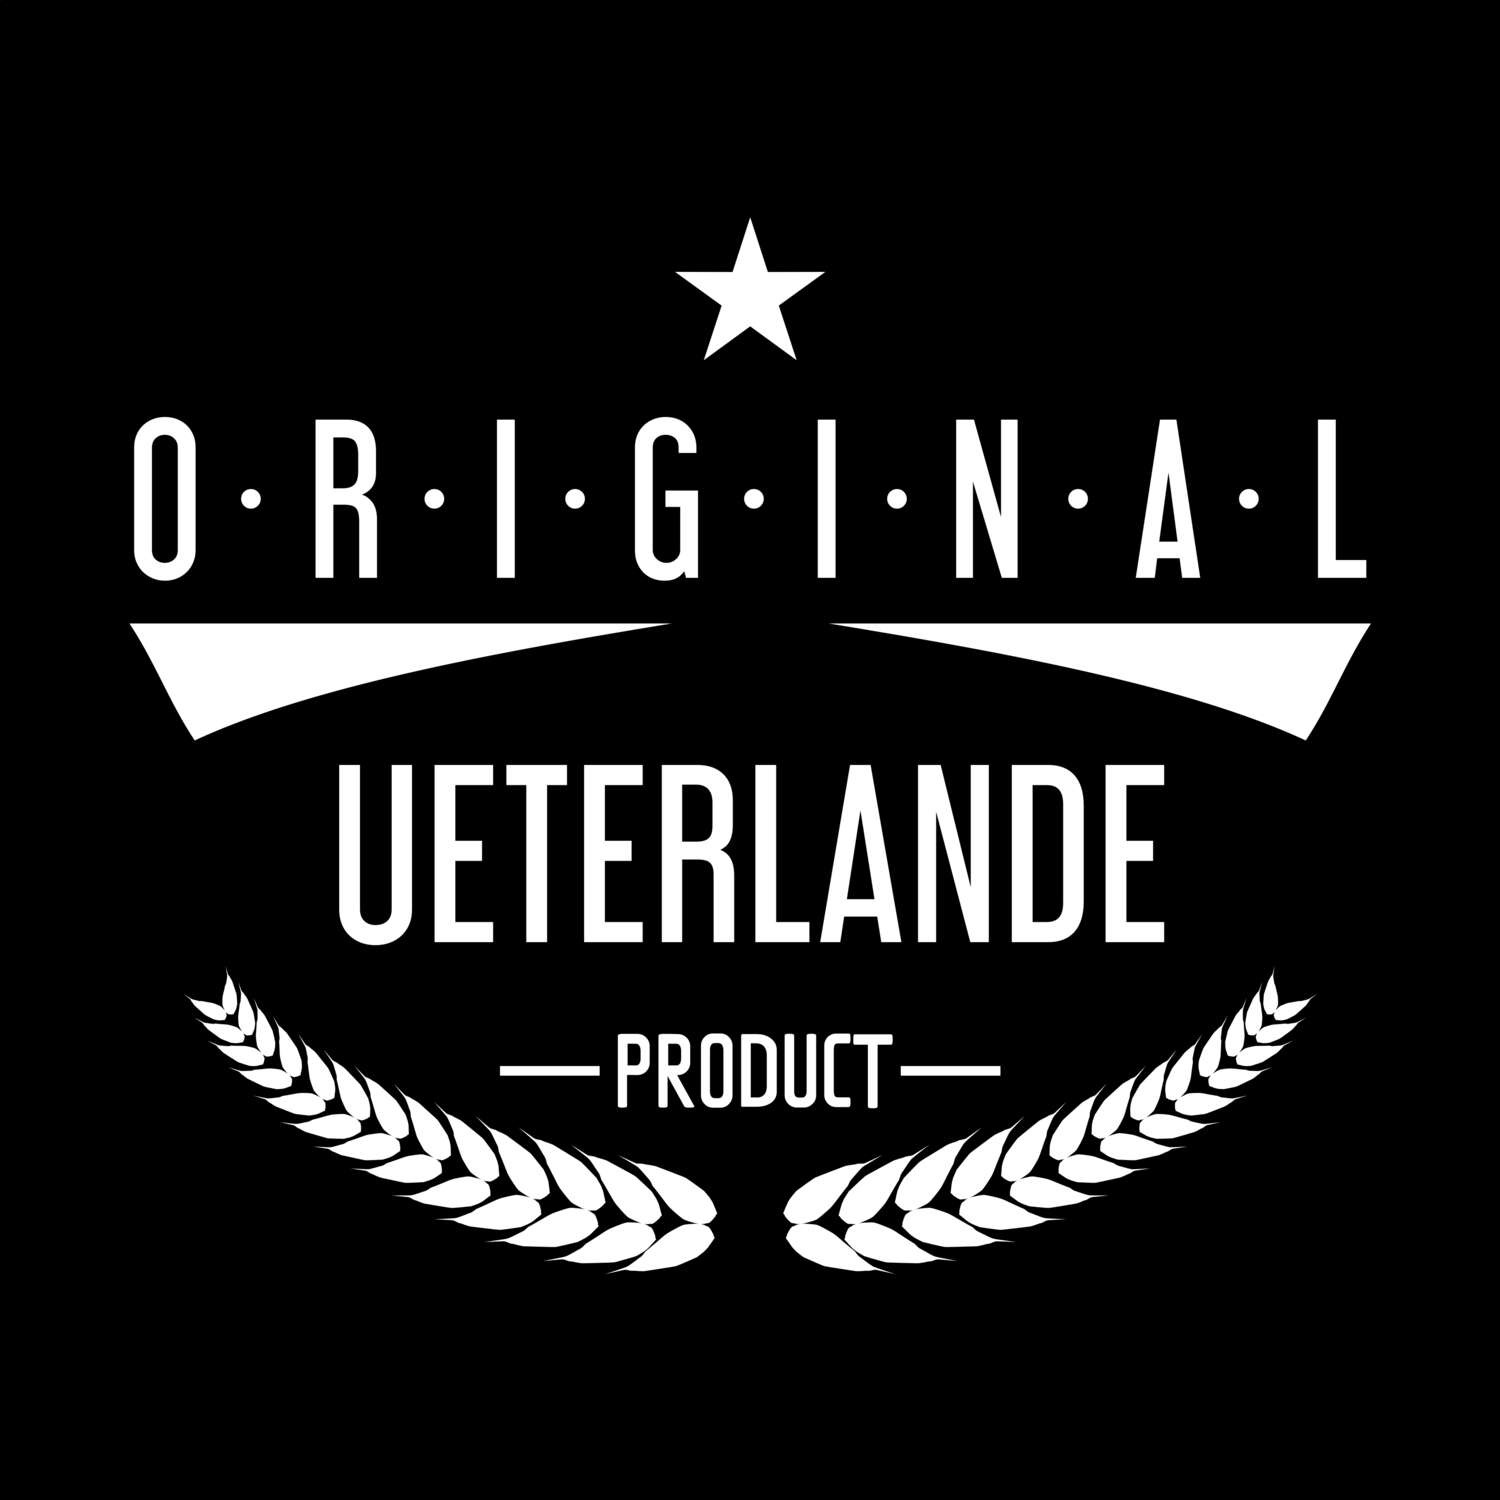 Ueterlande T-Shirt »Original Product«